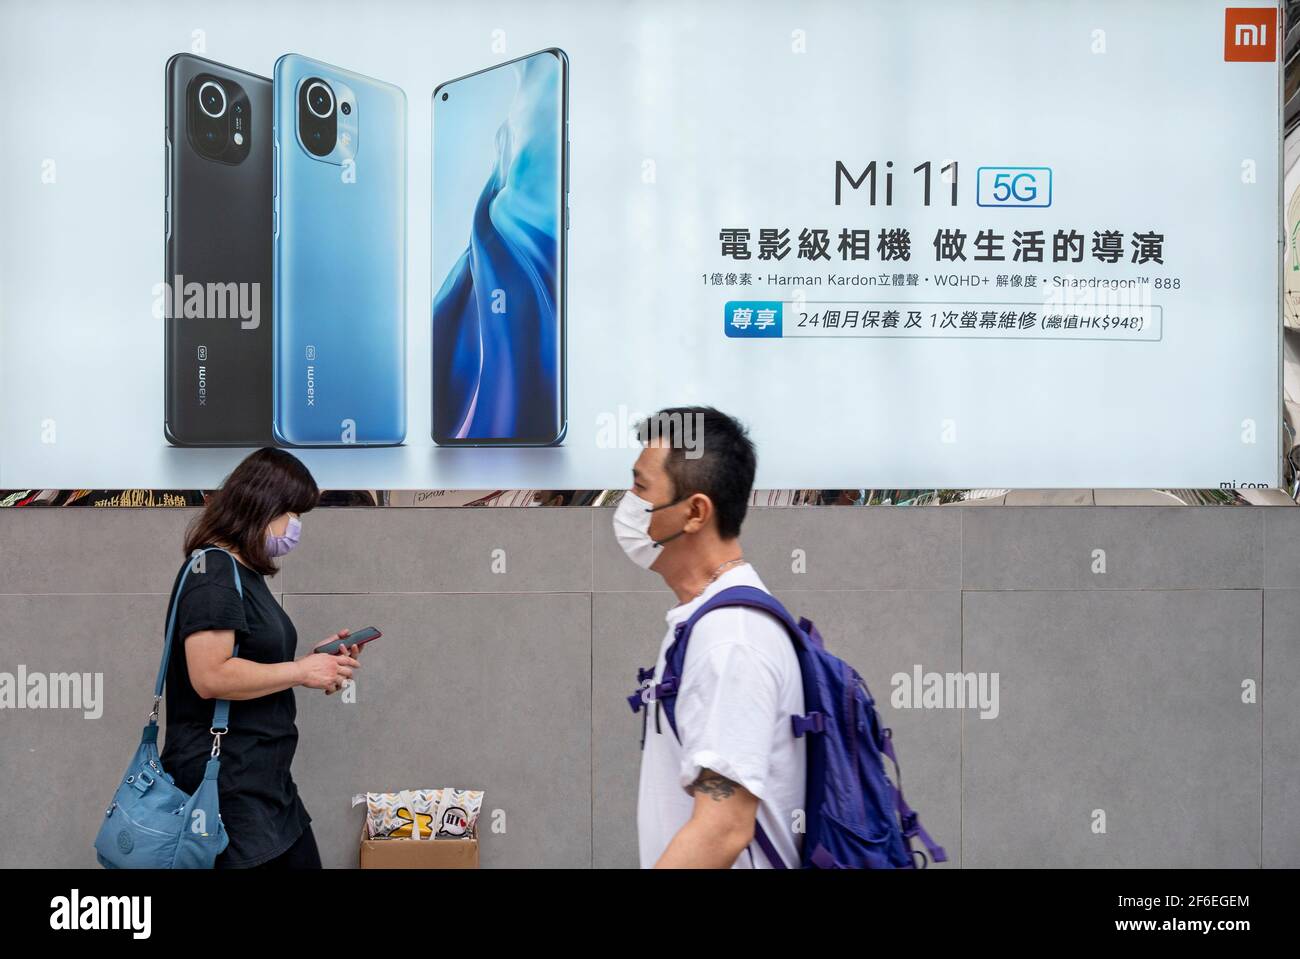 Shopping Oi - Smartphone Mi 11T Pro 5G